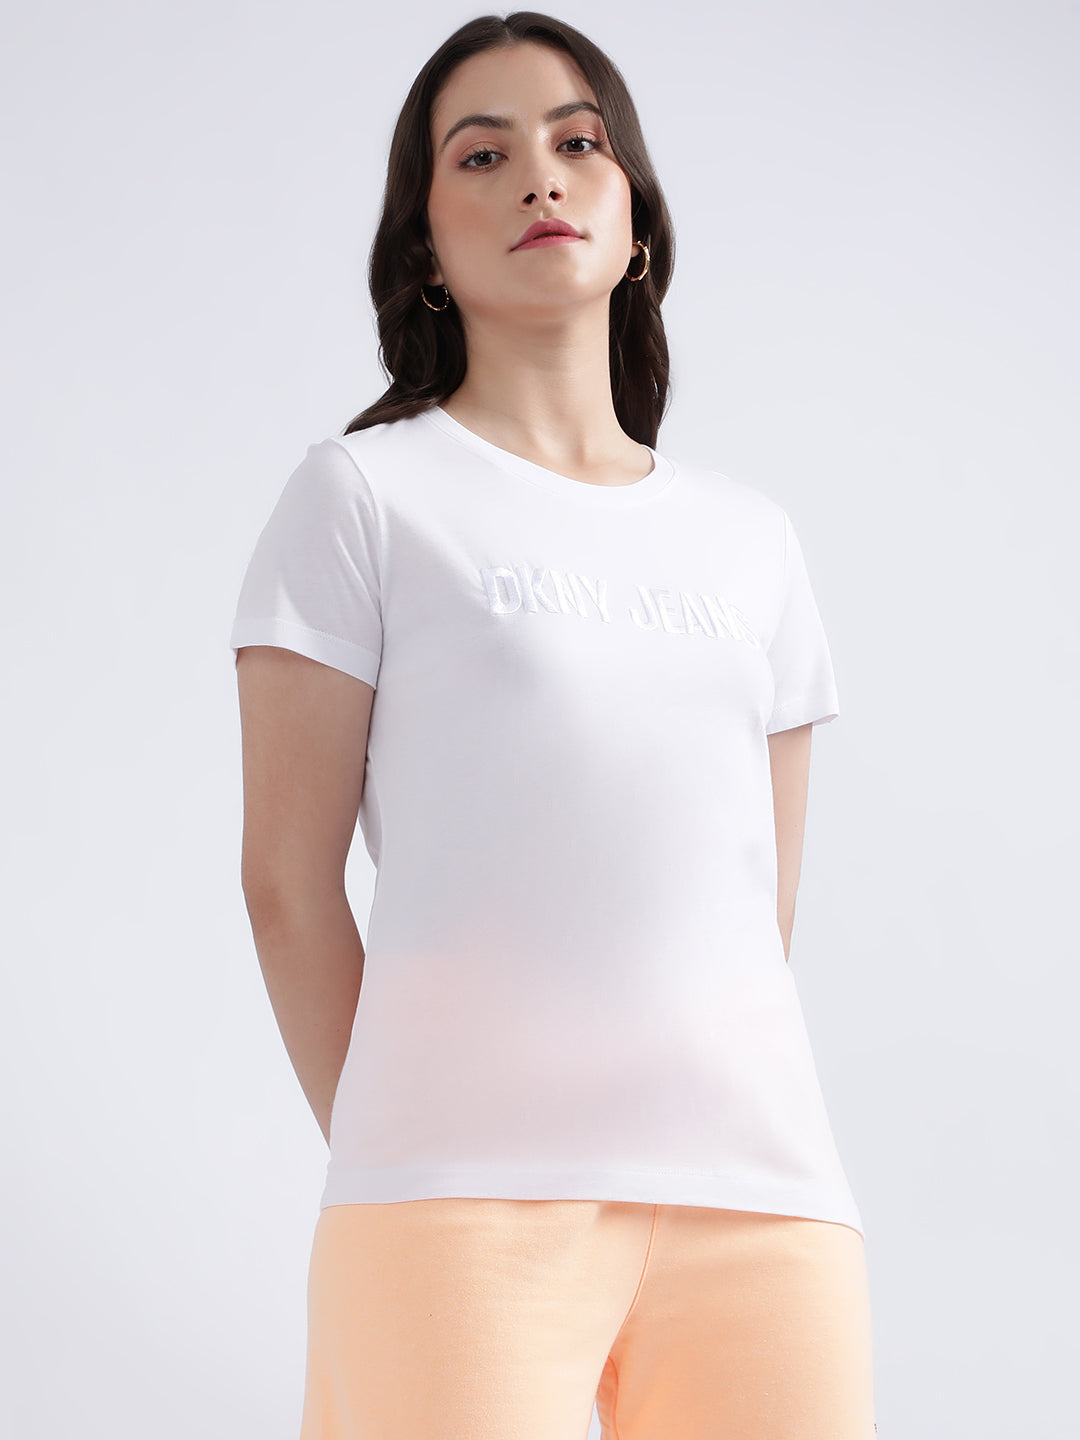 DKNY Women White Solid Round Neck TShirt